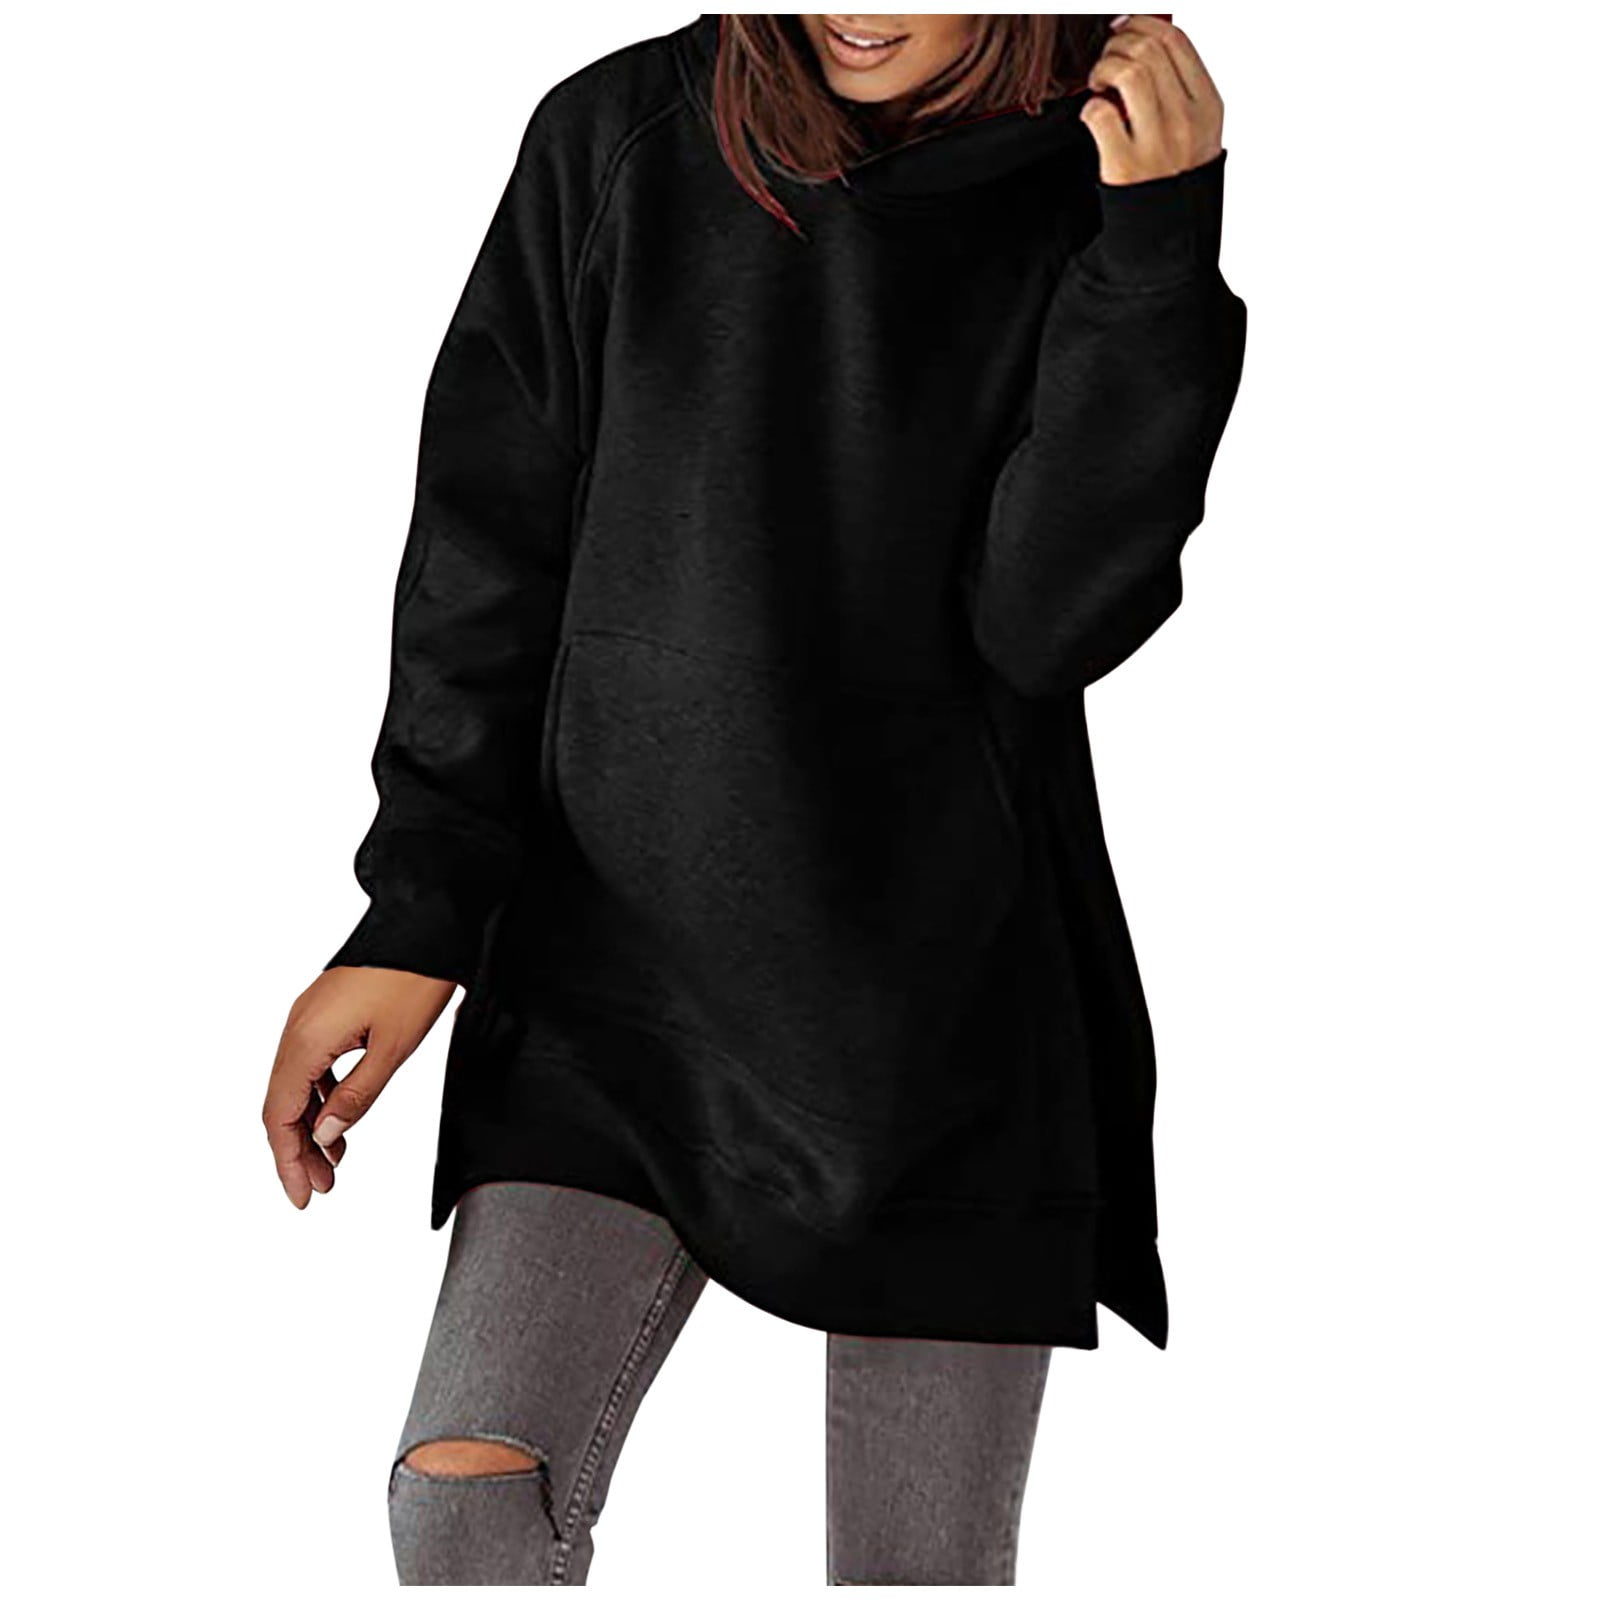 Oversized Sweatshirt for Women Long Sleeve Solid Color Hoodies Side ...